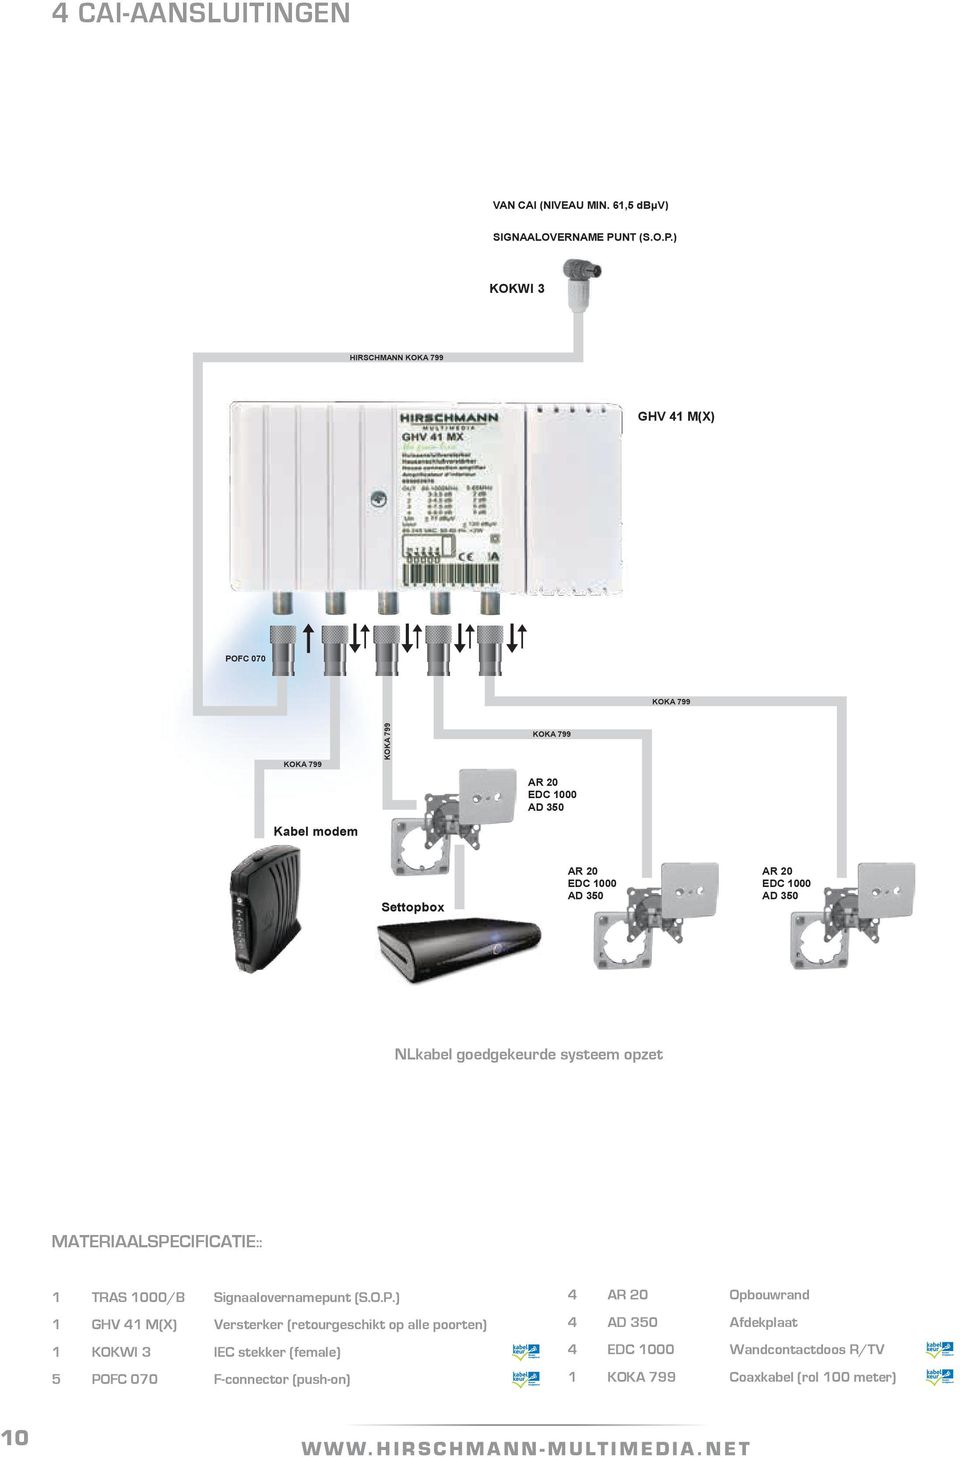 ) KOKWI 3 HIRSCHMANN GHV 41 M(X) POFC 070 Kabel modem Settopbox NLkabel goedgekeurde systeem opzet Materiaalspecificatie::